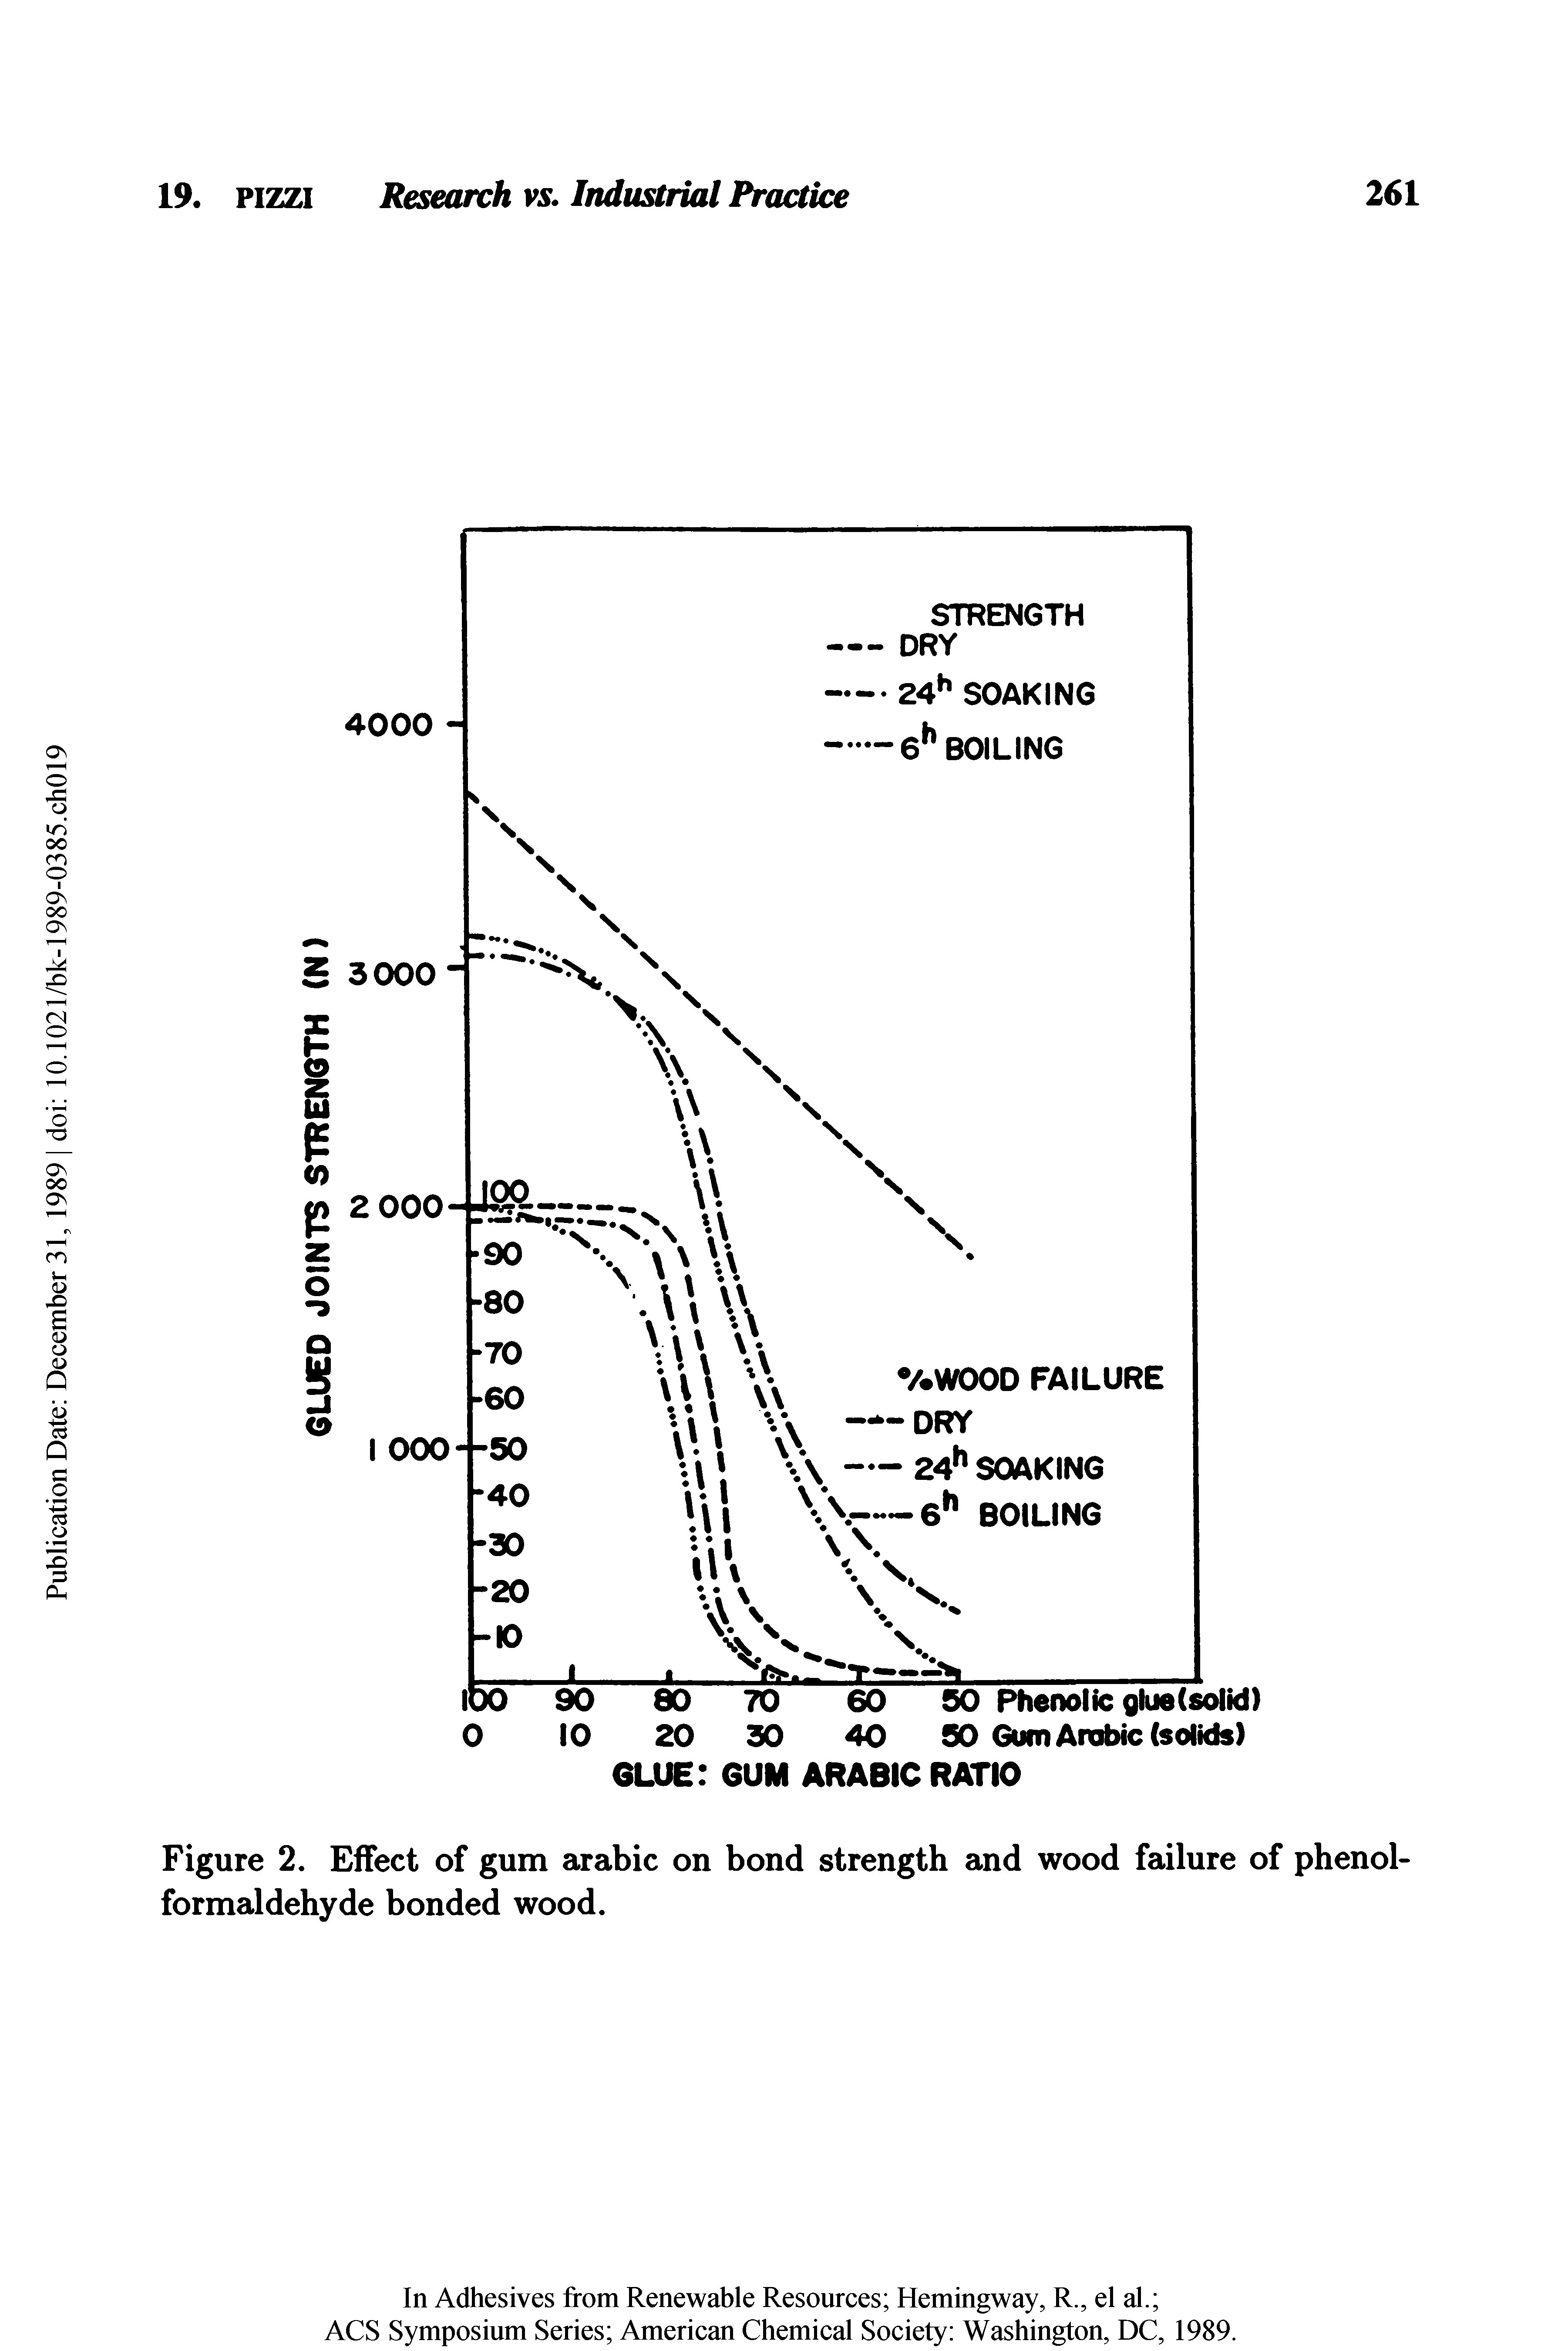 Figure 2. Effect of gum arabic on bond strength and wood failure of phenol-formaldehyde bonded wood.